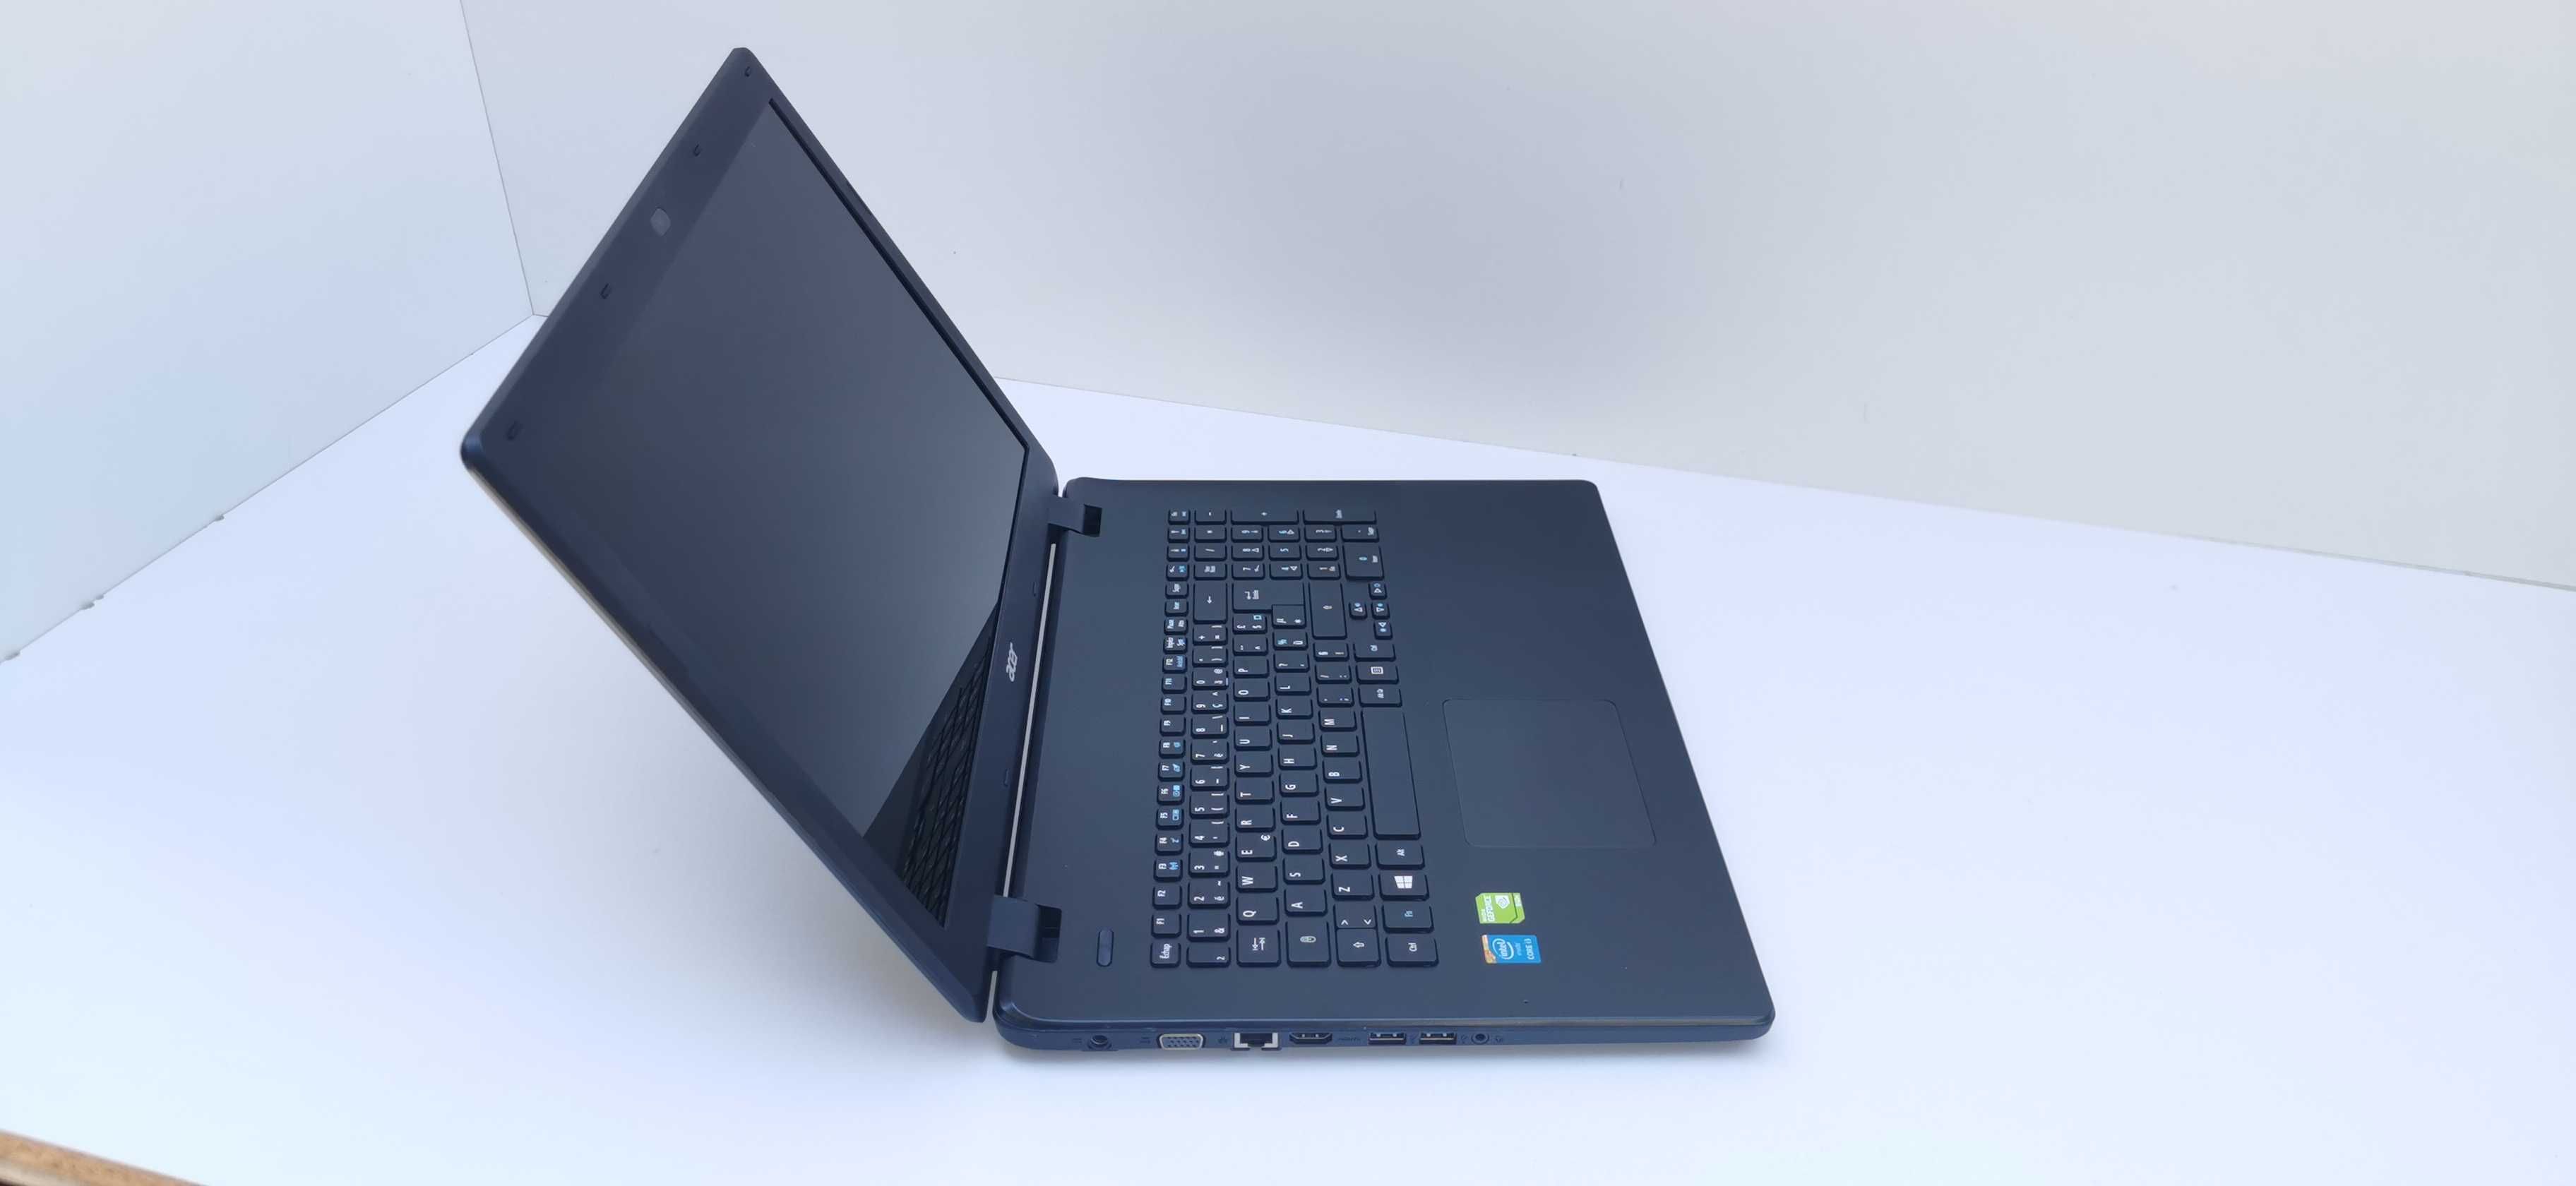 Acer E5-771 la doar 699 lei nVidia GeForce intel i3 500 GB Storage